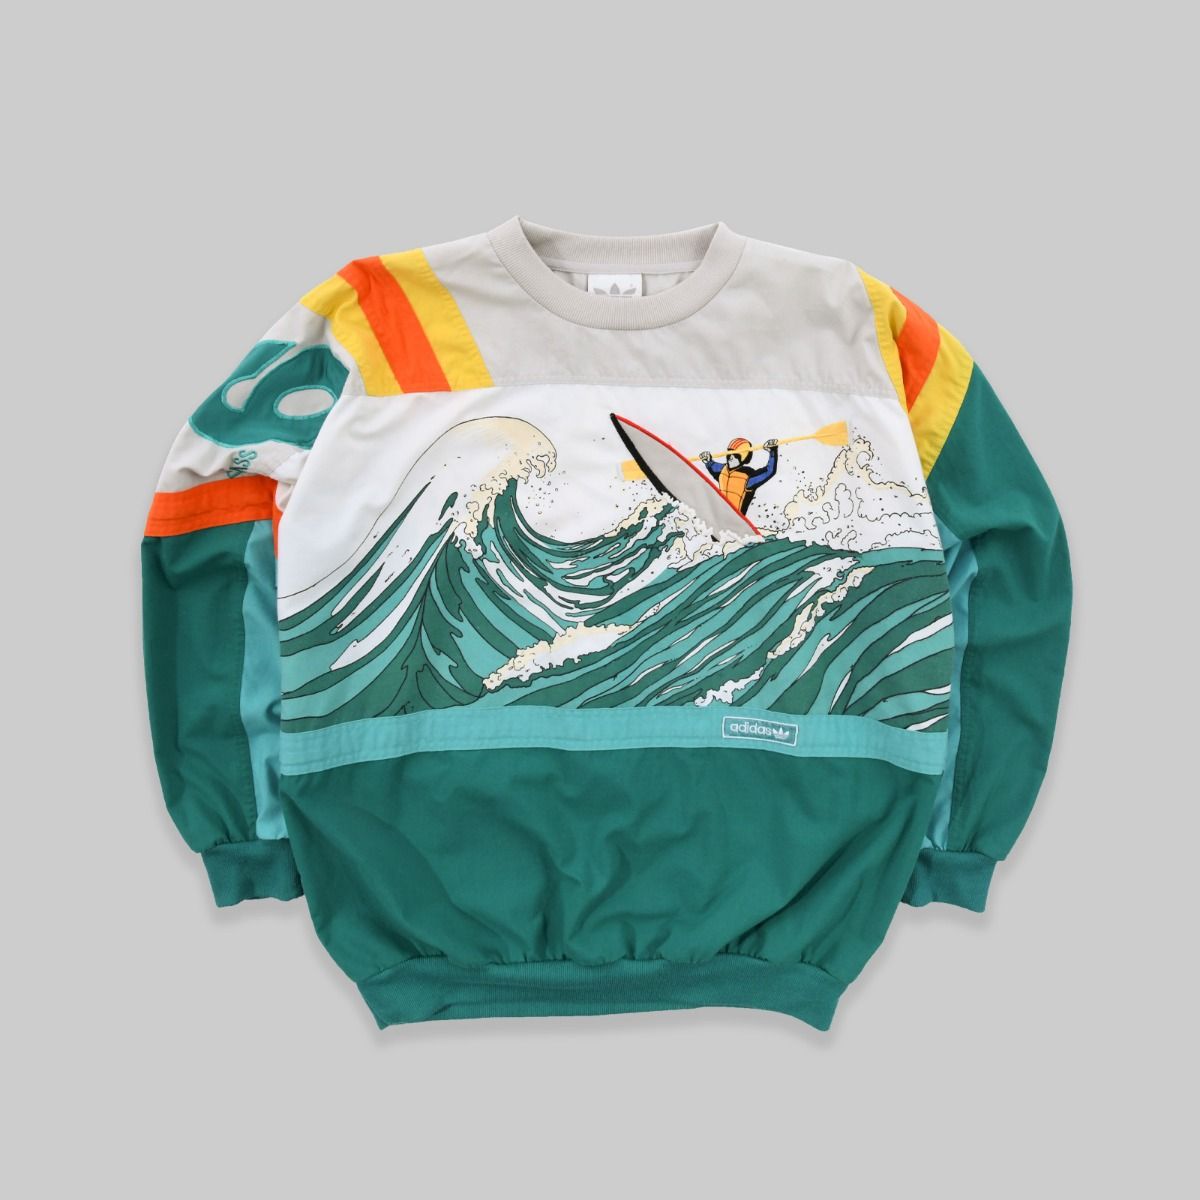 Adidas 1980s 'Devil's Toenail' Sweatshirt